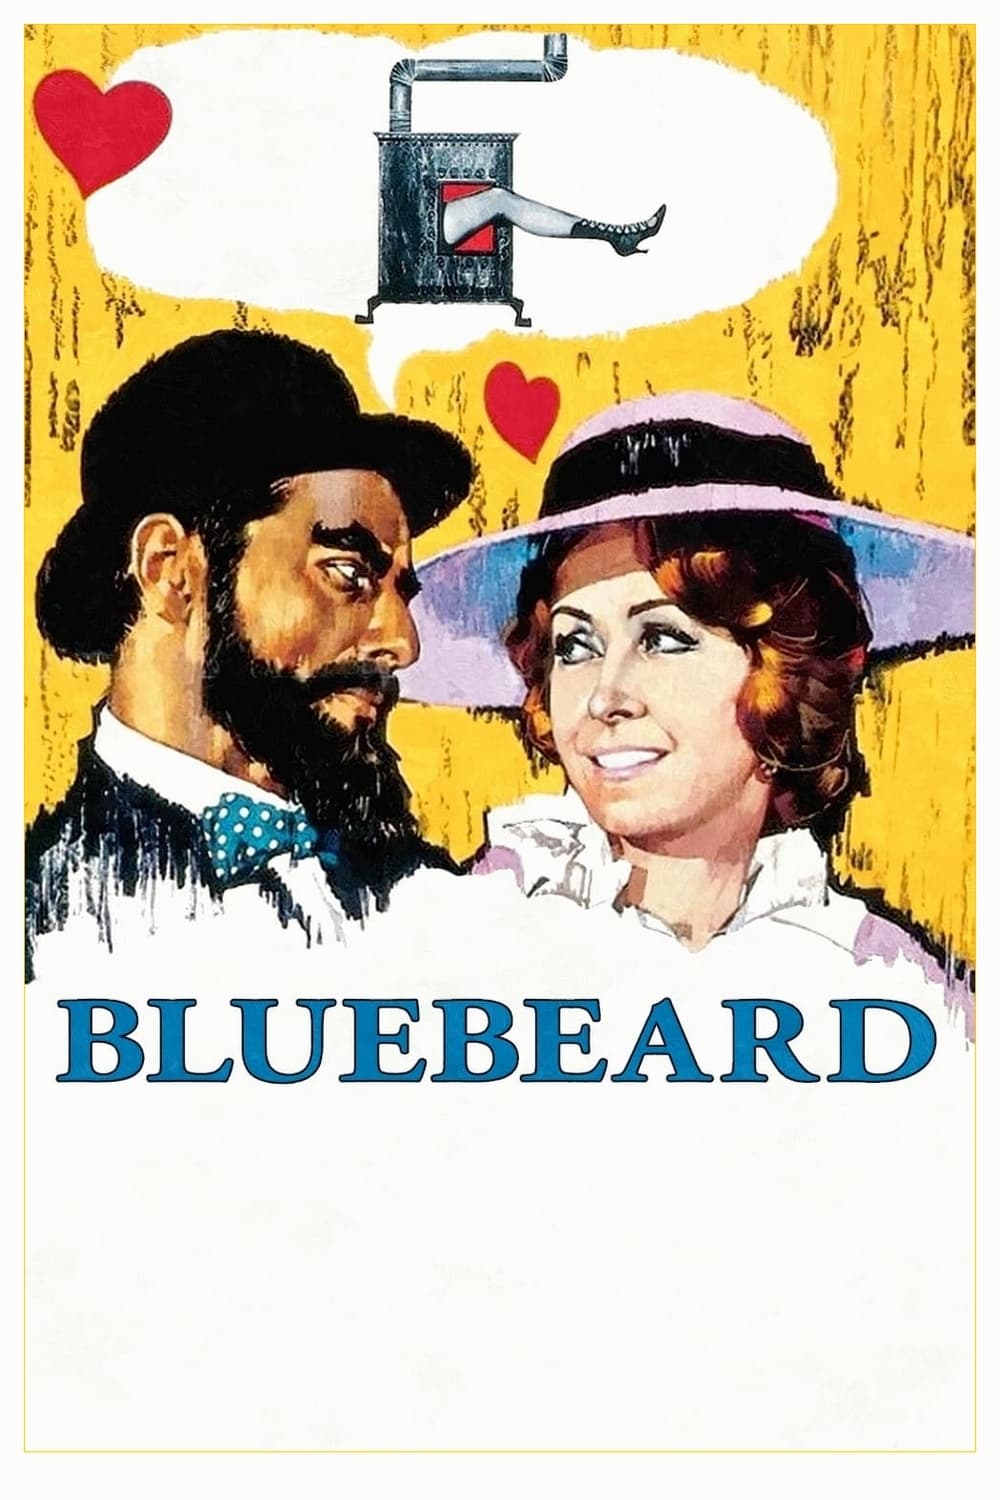 Bluebeard (1963)